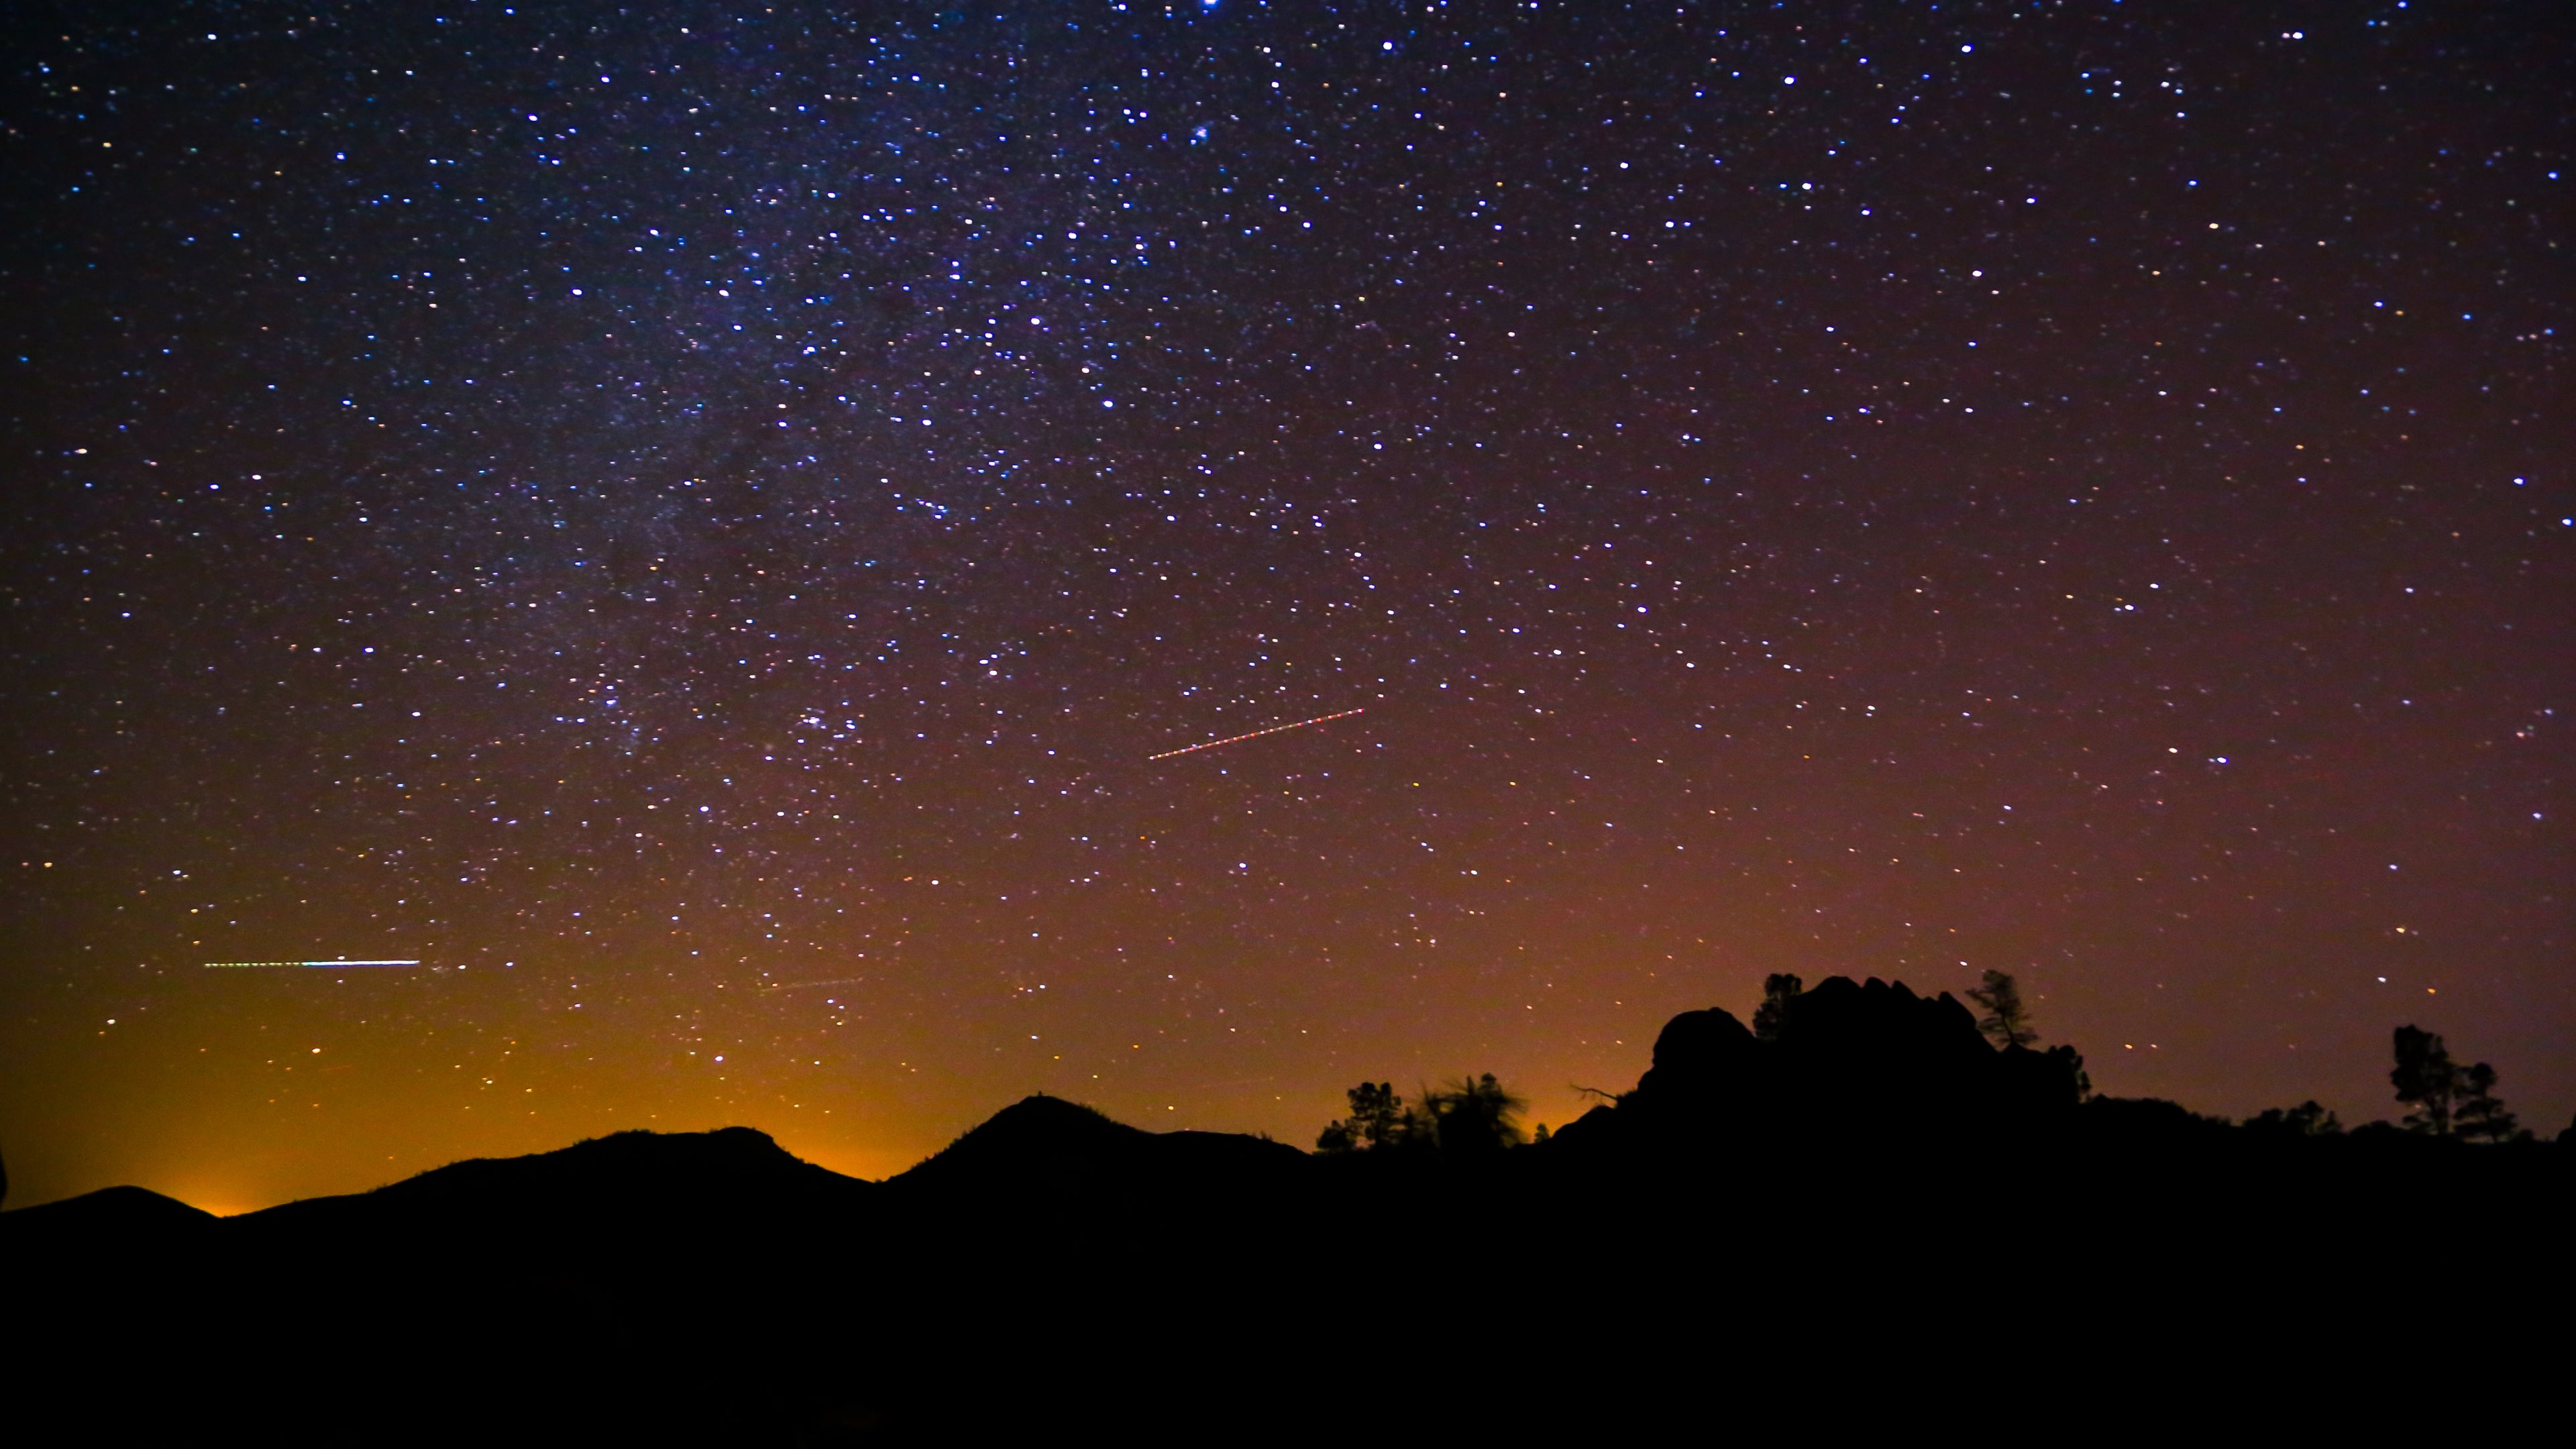 Milky Way Constellation On The Night Sky HD Wallpaper 4k